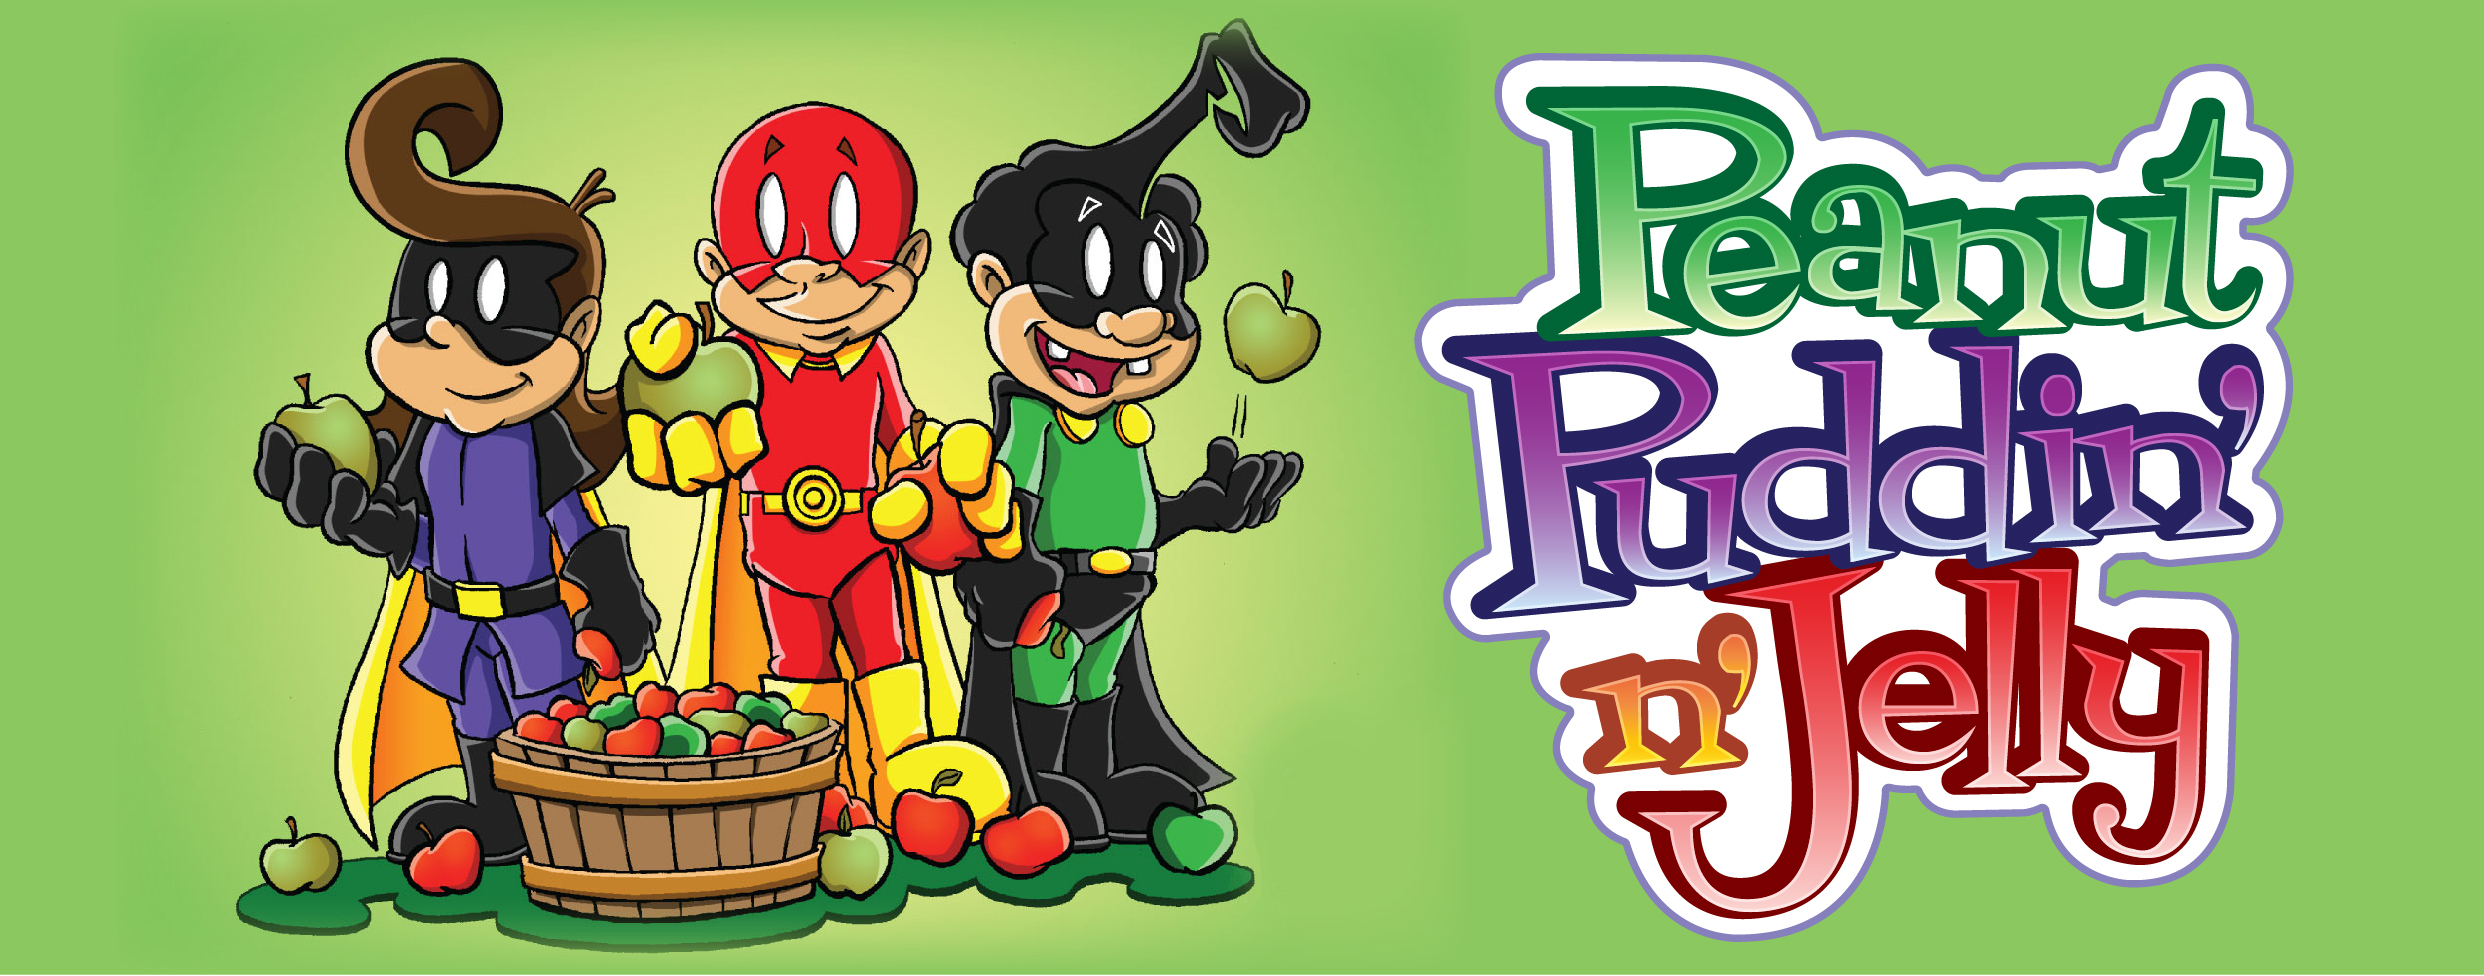 Peanut Puddin N Jelly Comic Series Hazzum Productions